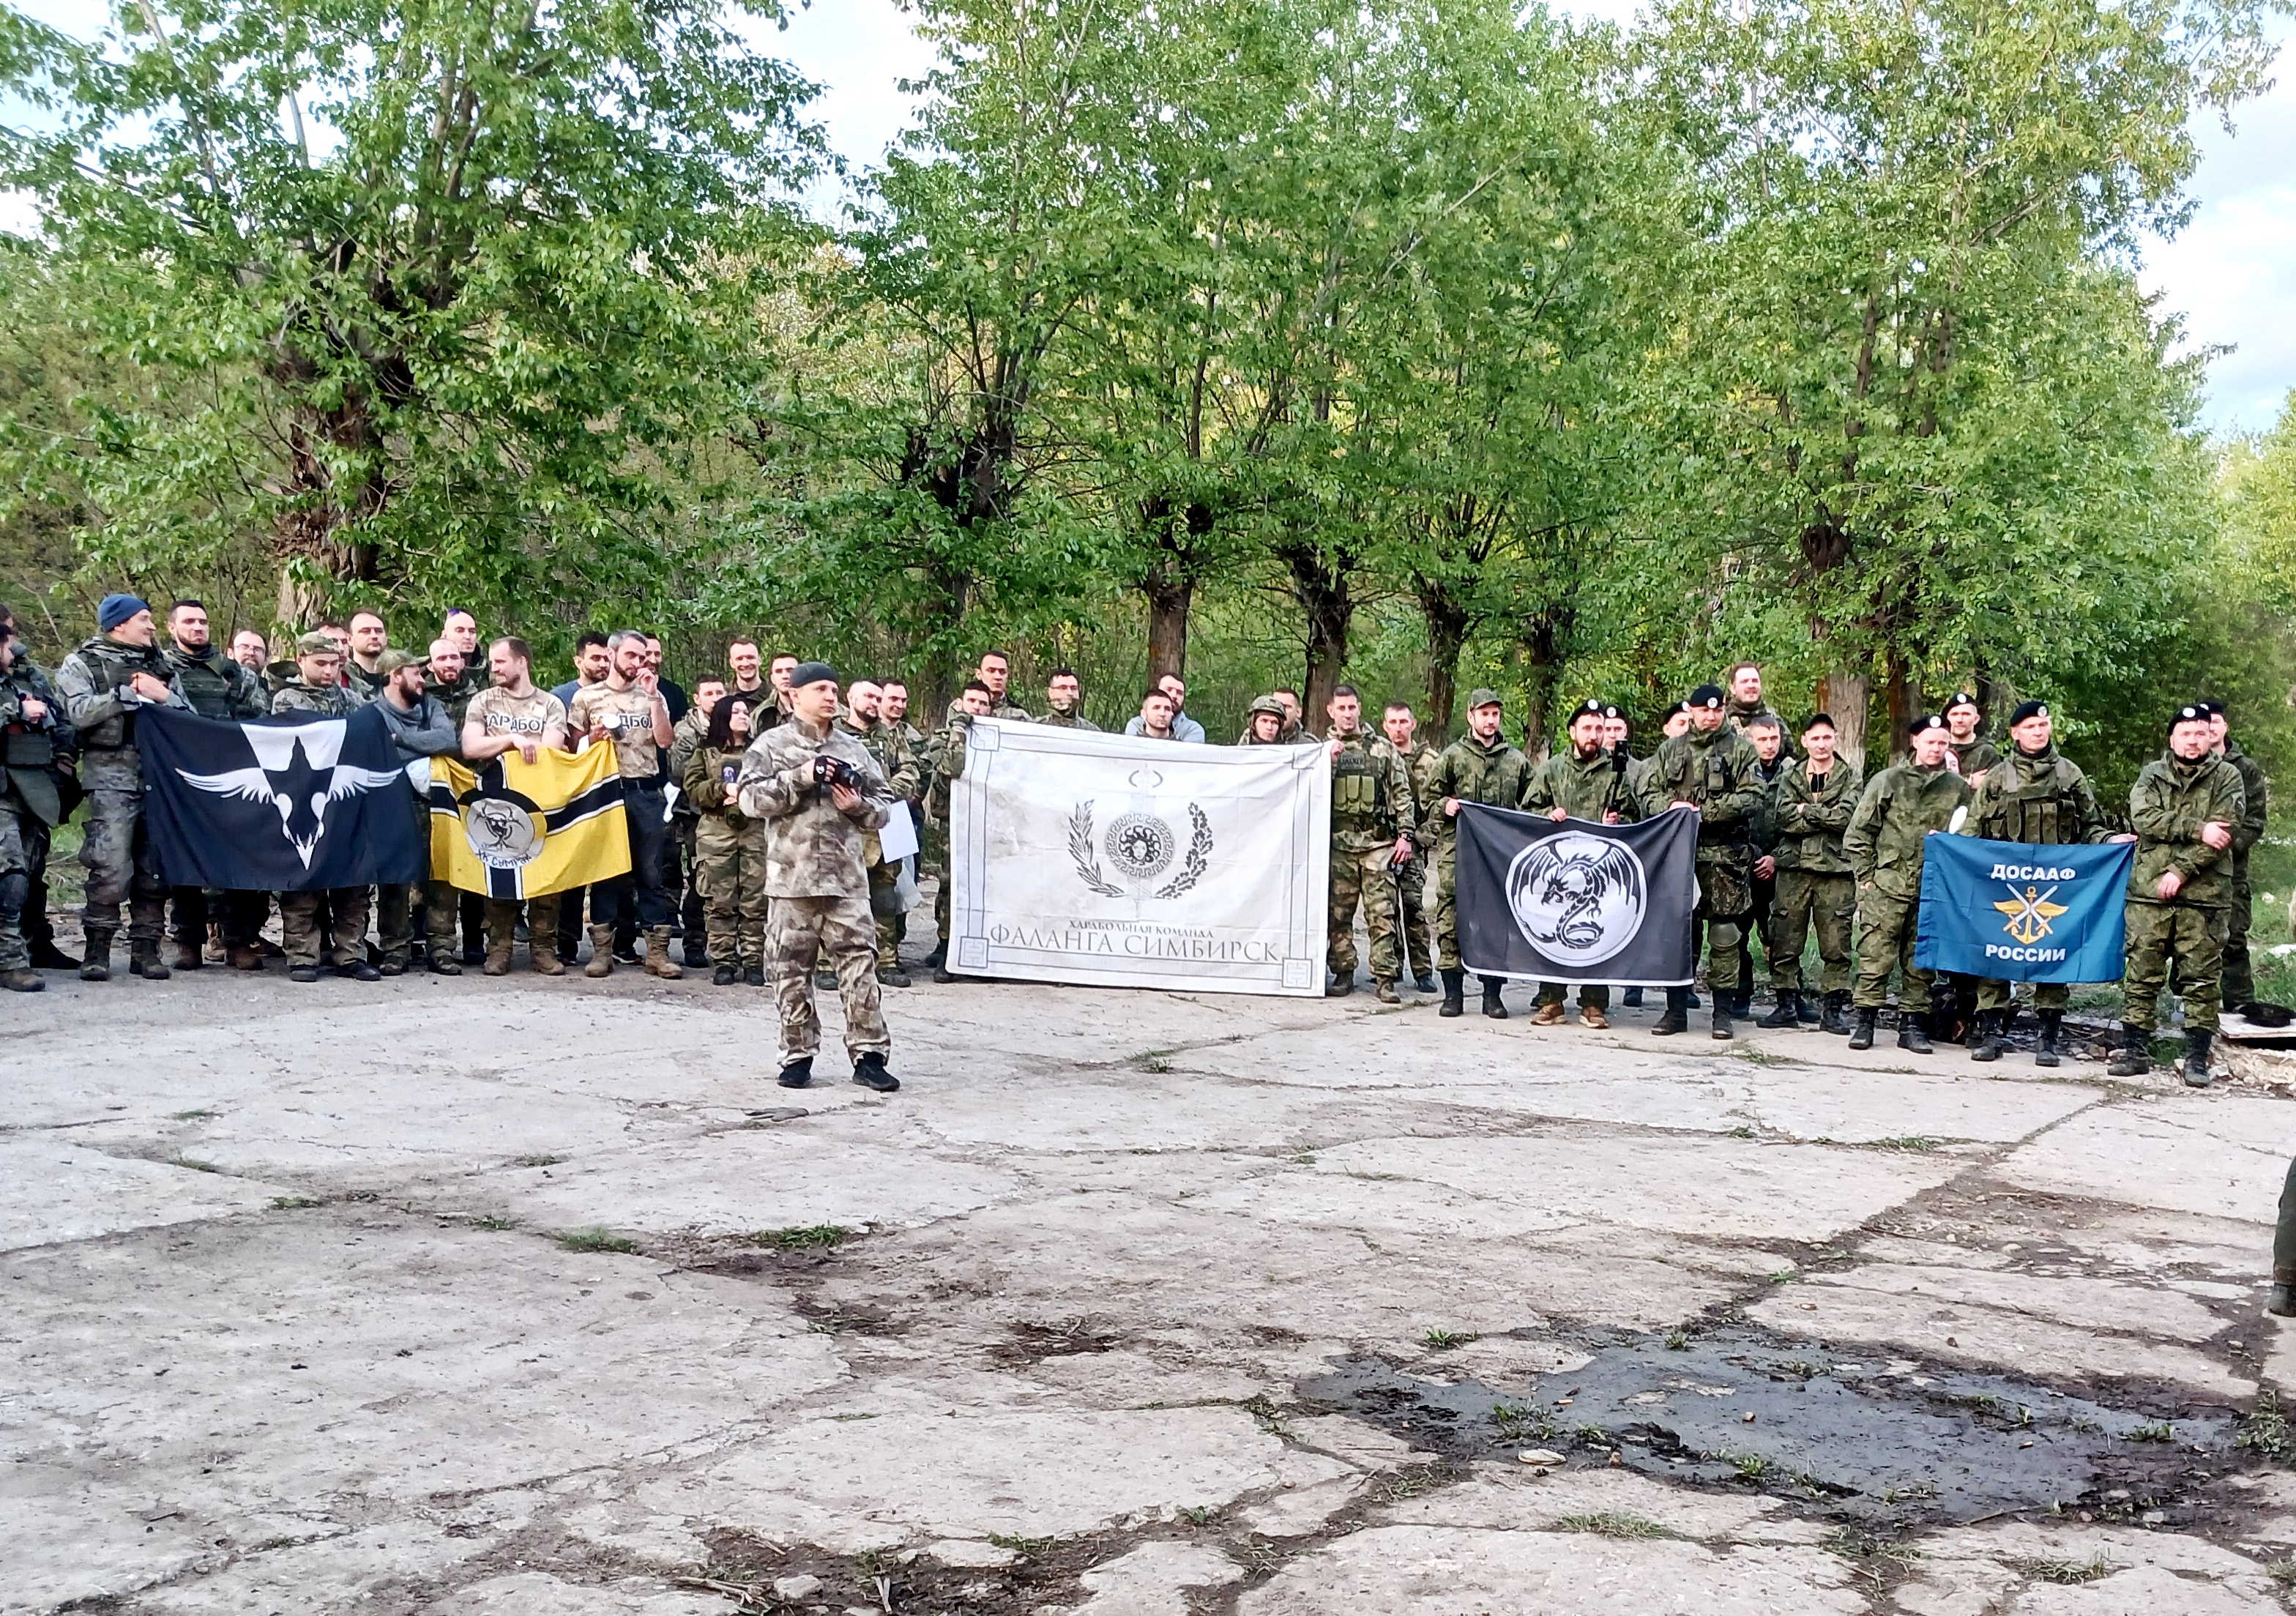 Поклонники хардбола собрались в Ульяновске…